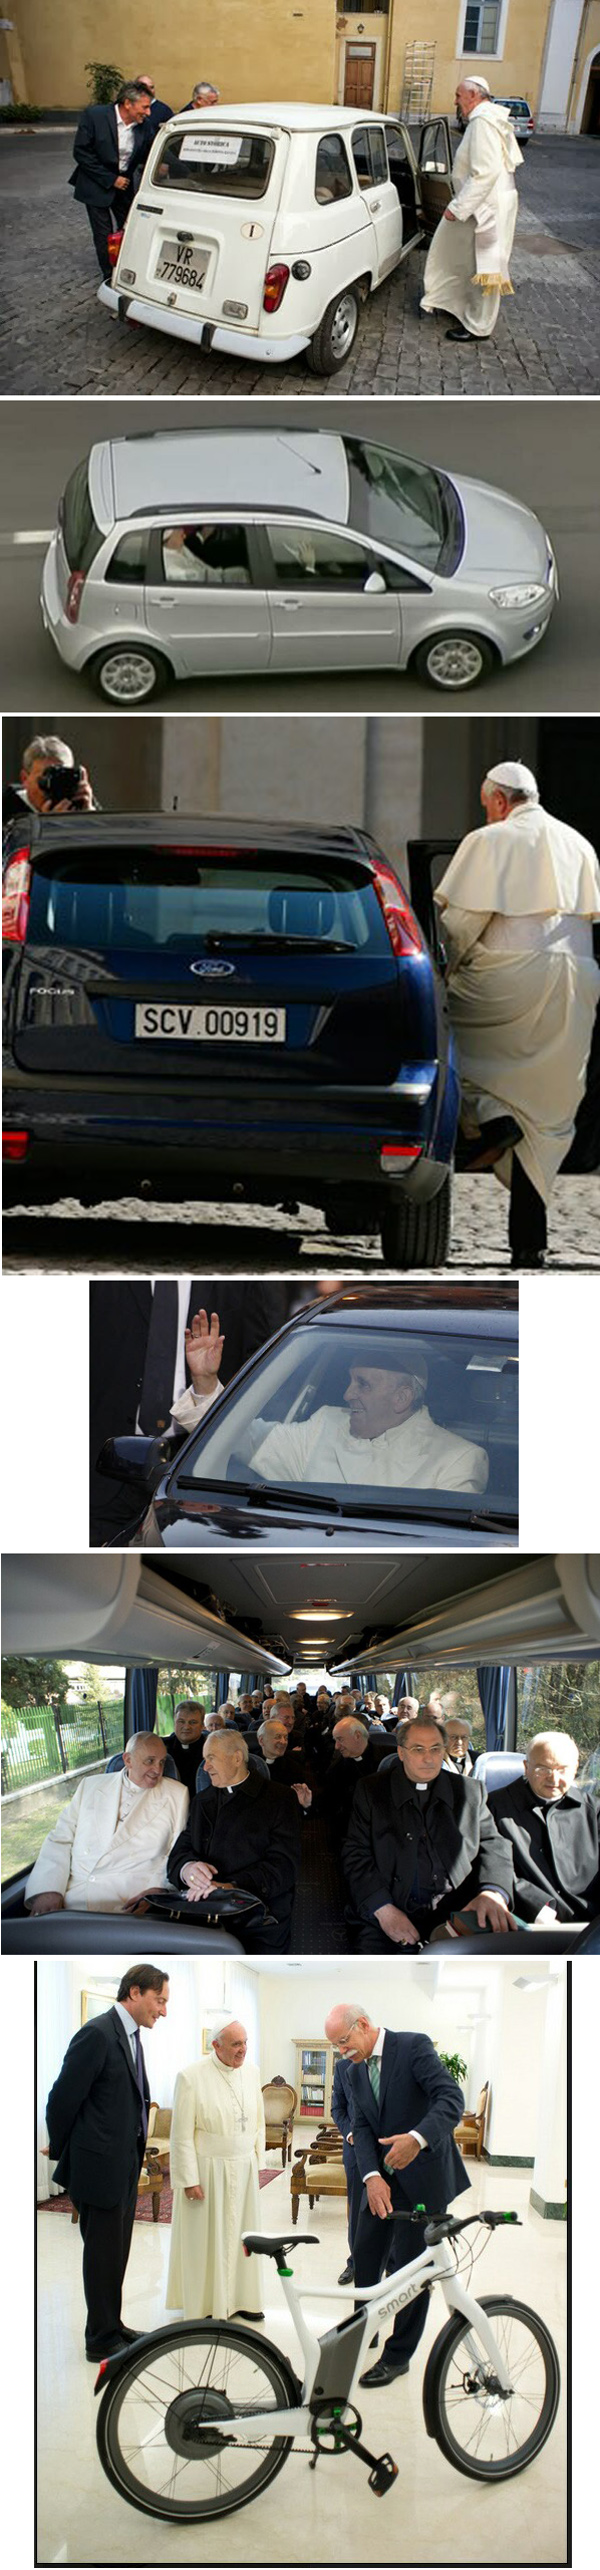 Papal cars 09